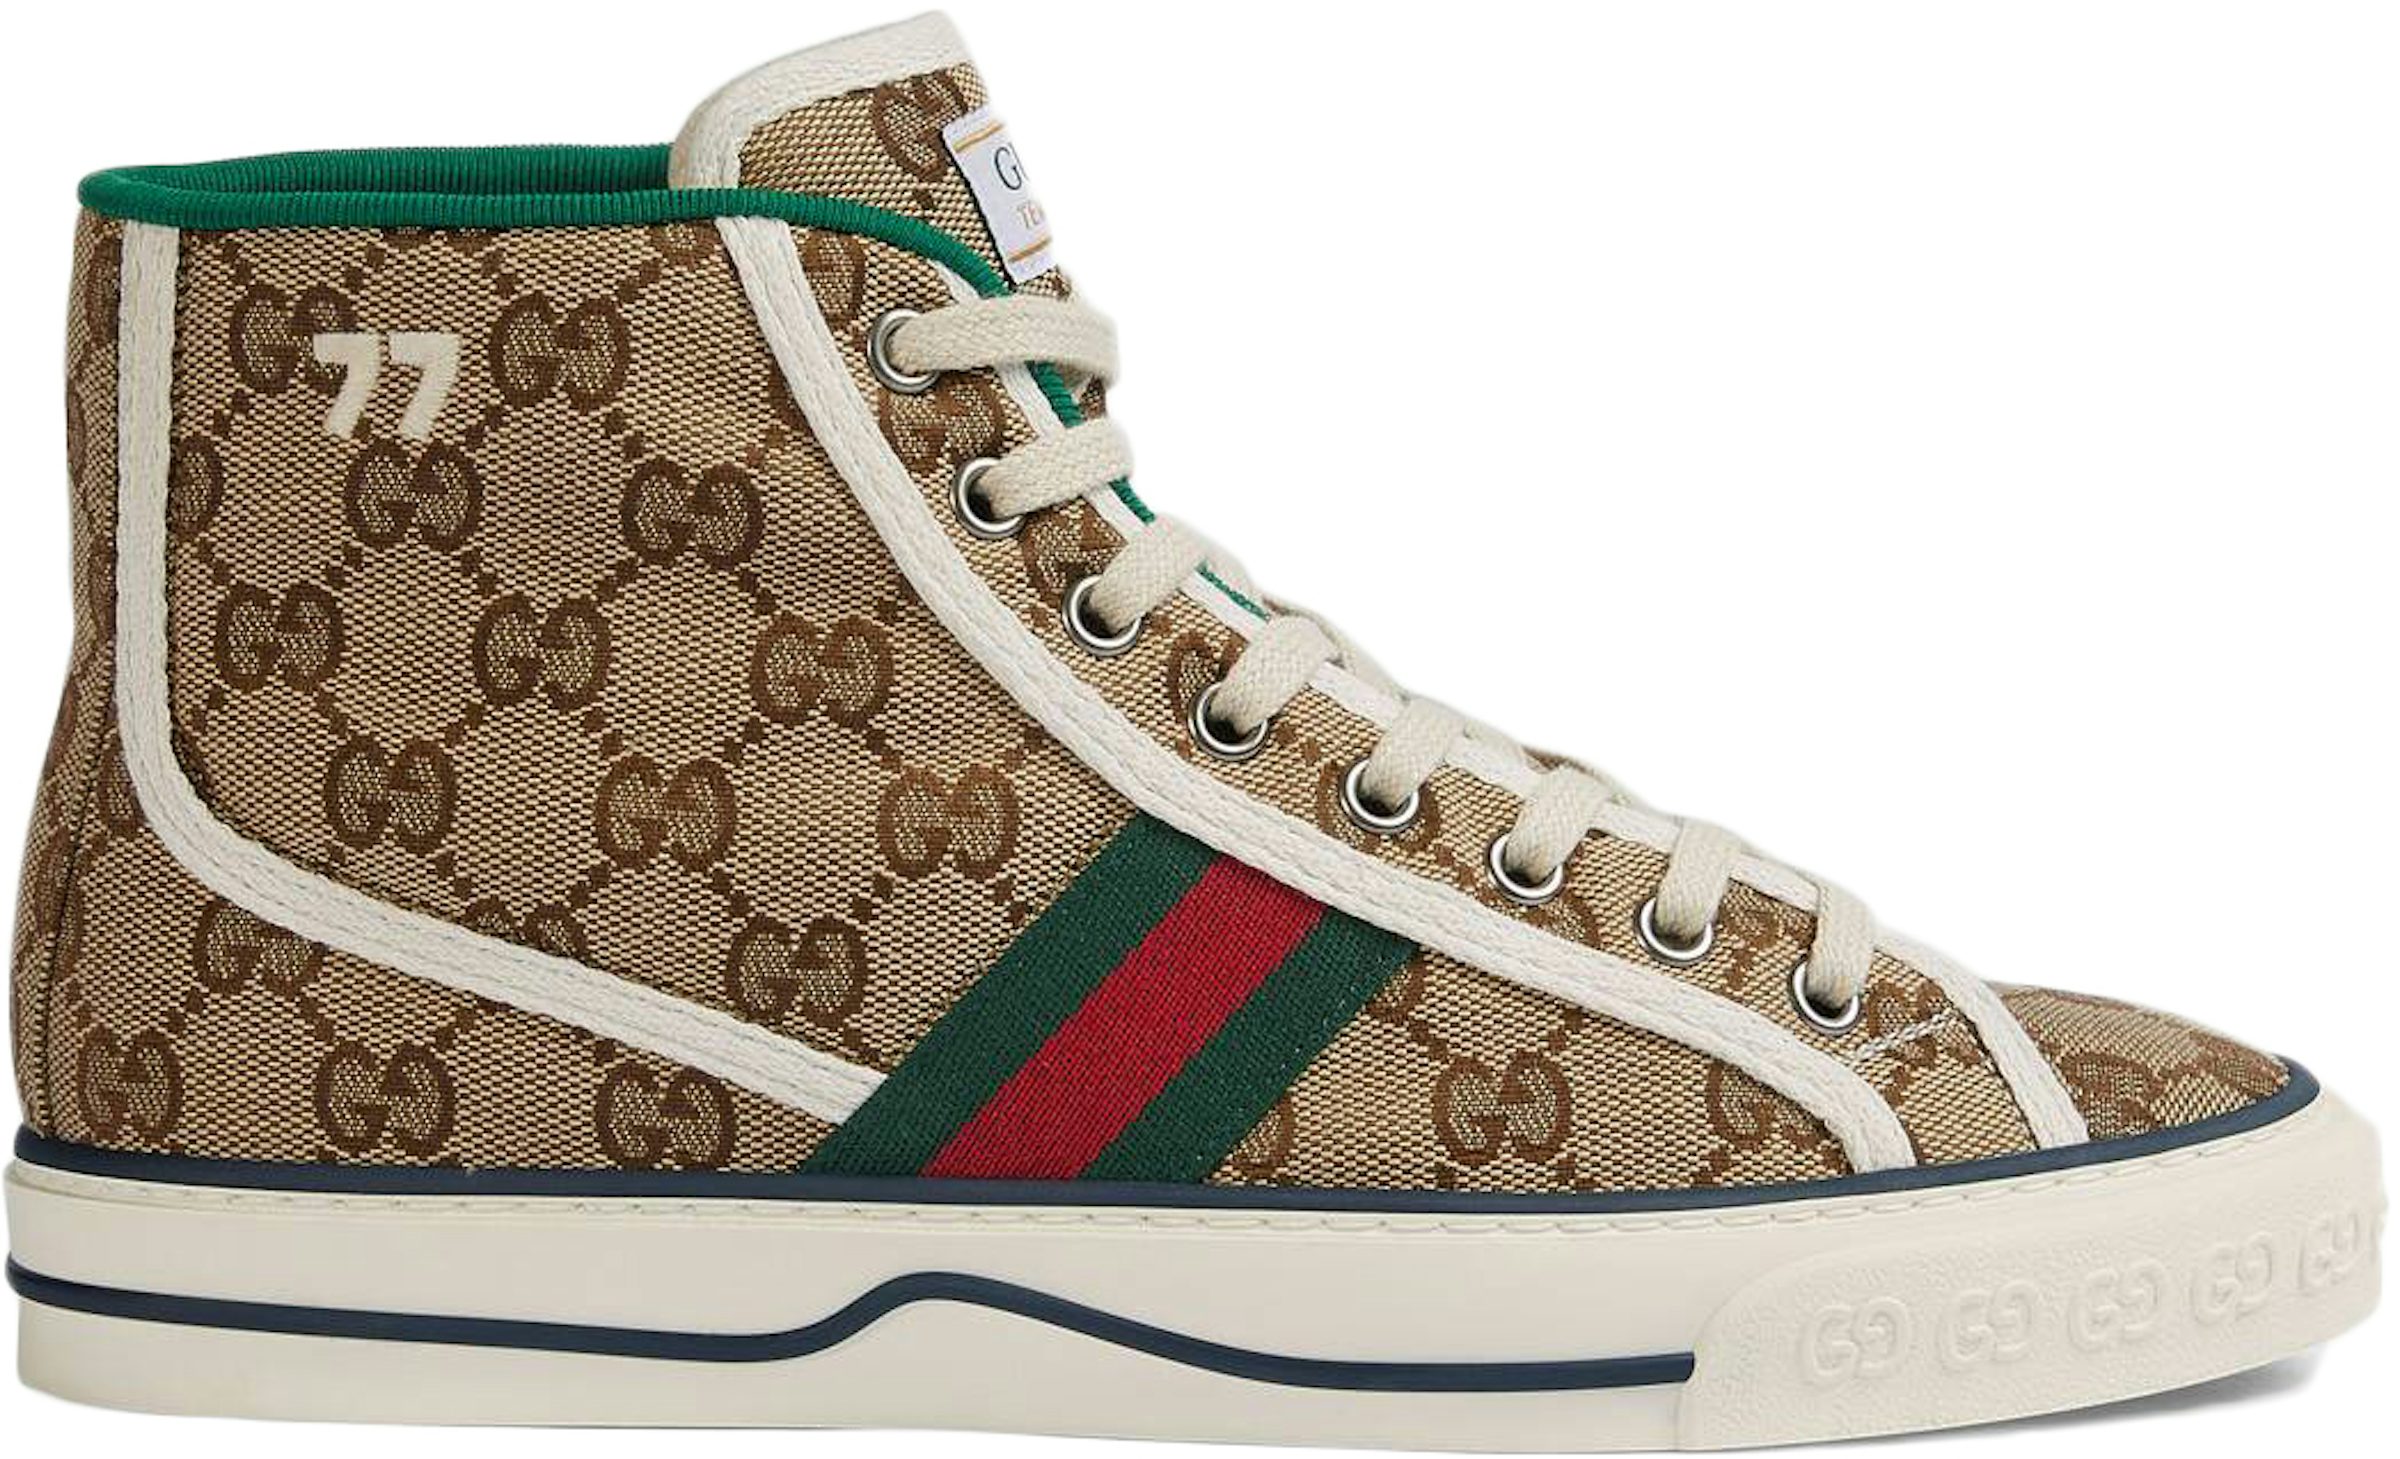 adidas Originals X Gucci Gazelle gg Supreme Shoes in Natural for Men